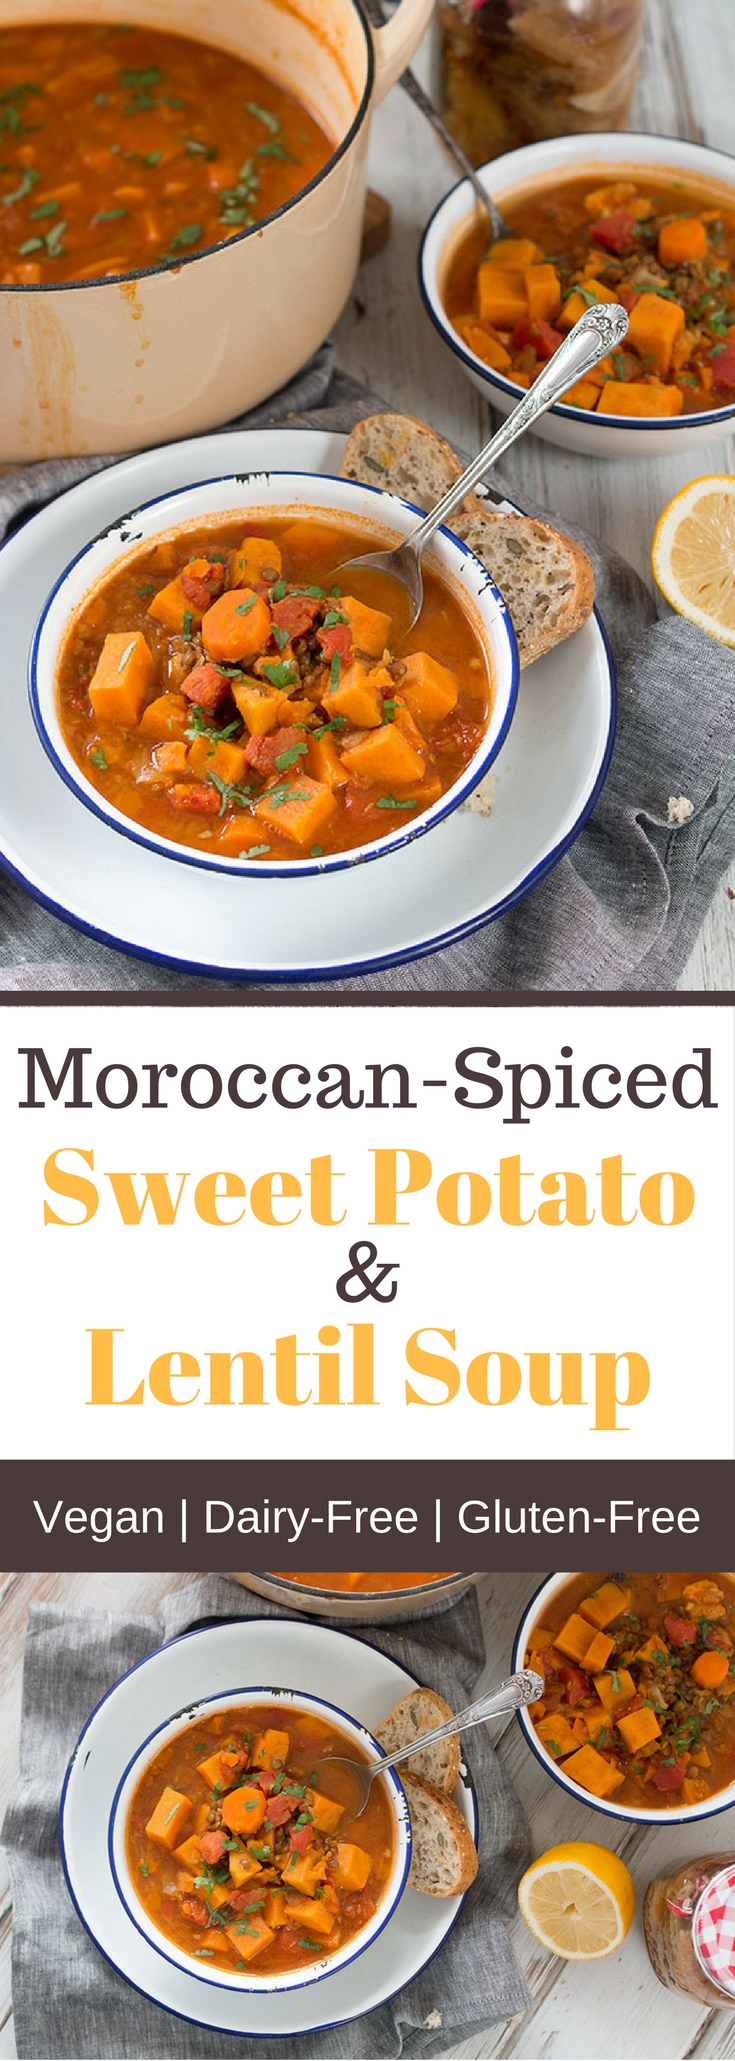 Moroccan-Spiced Sweet Potato & Lentil Soup